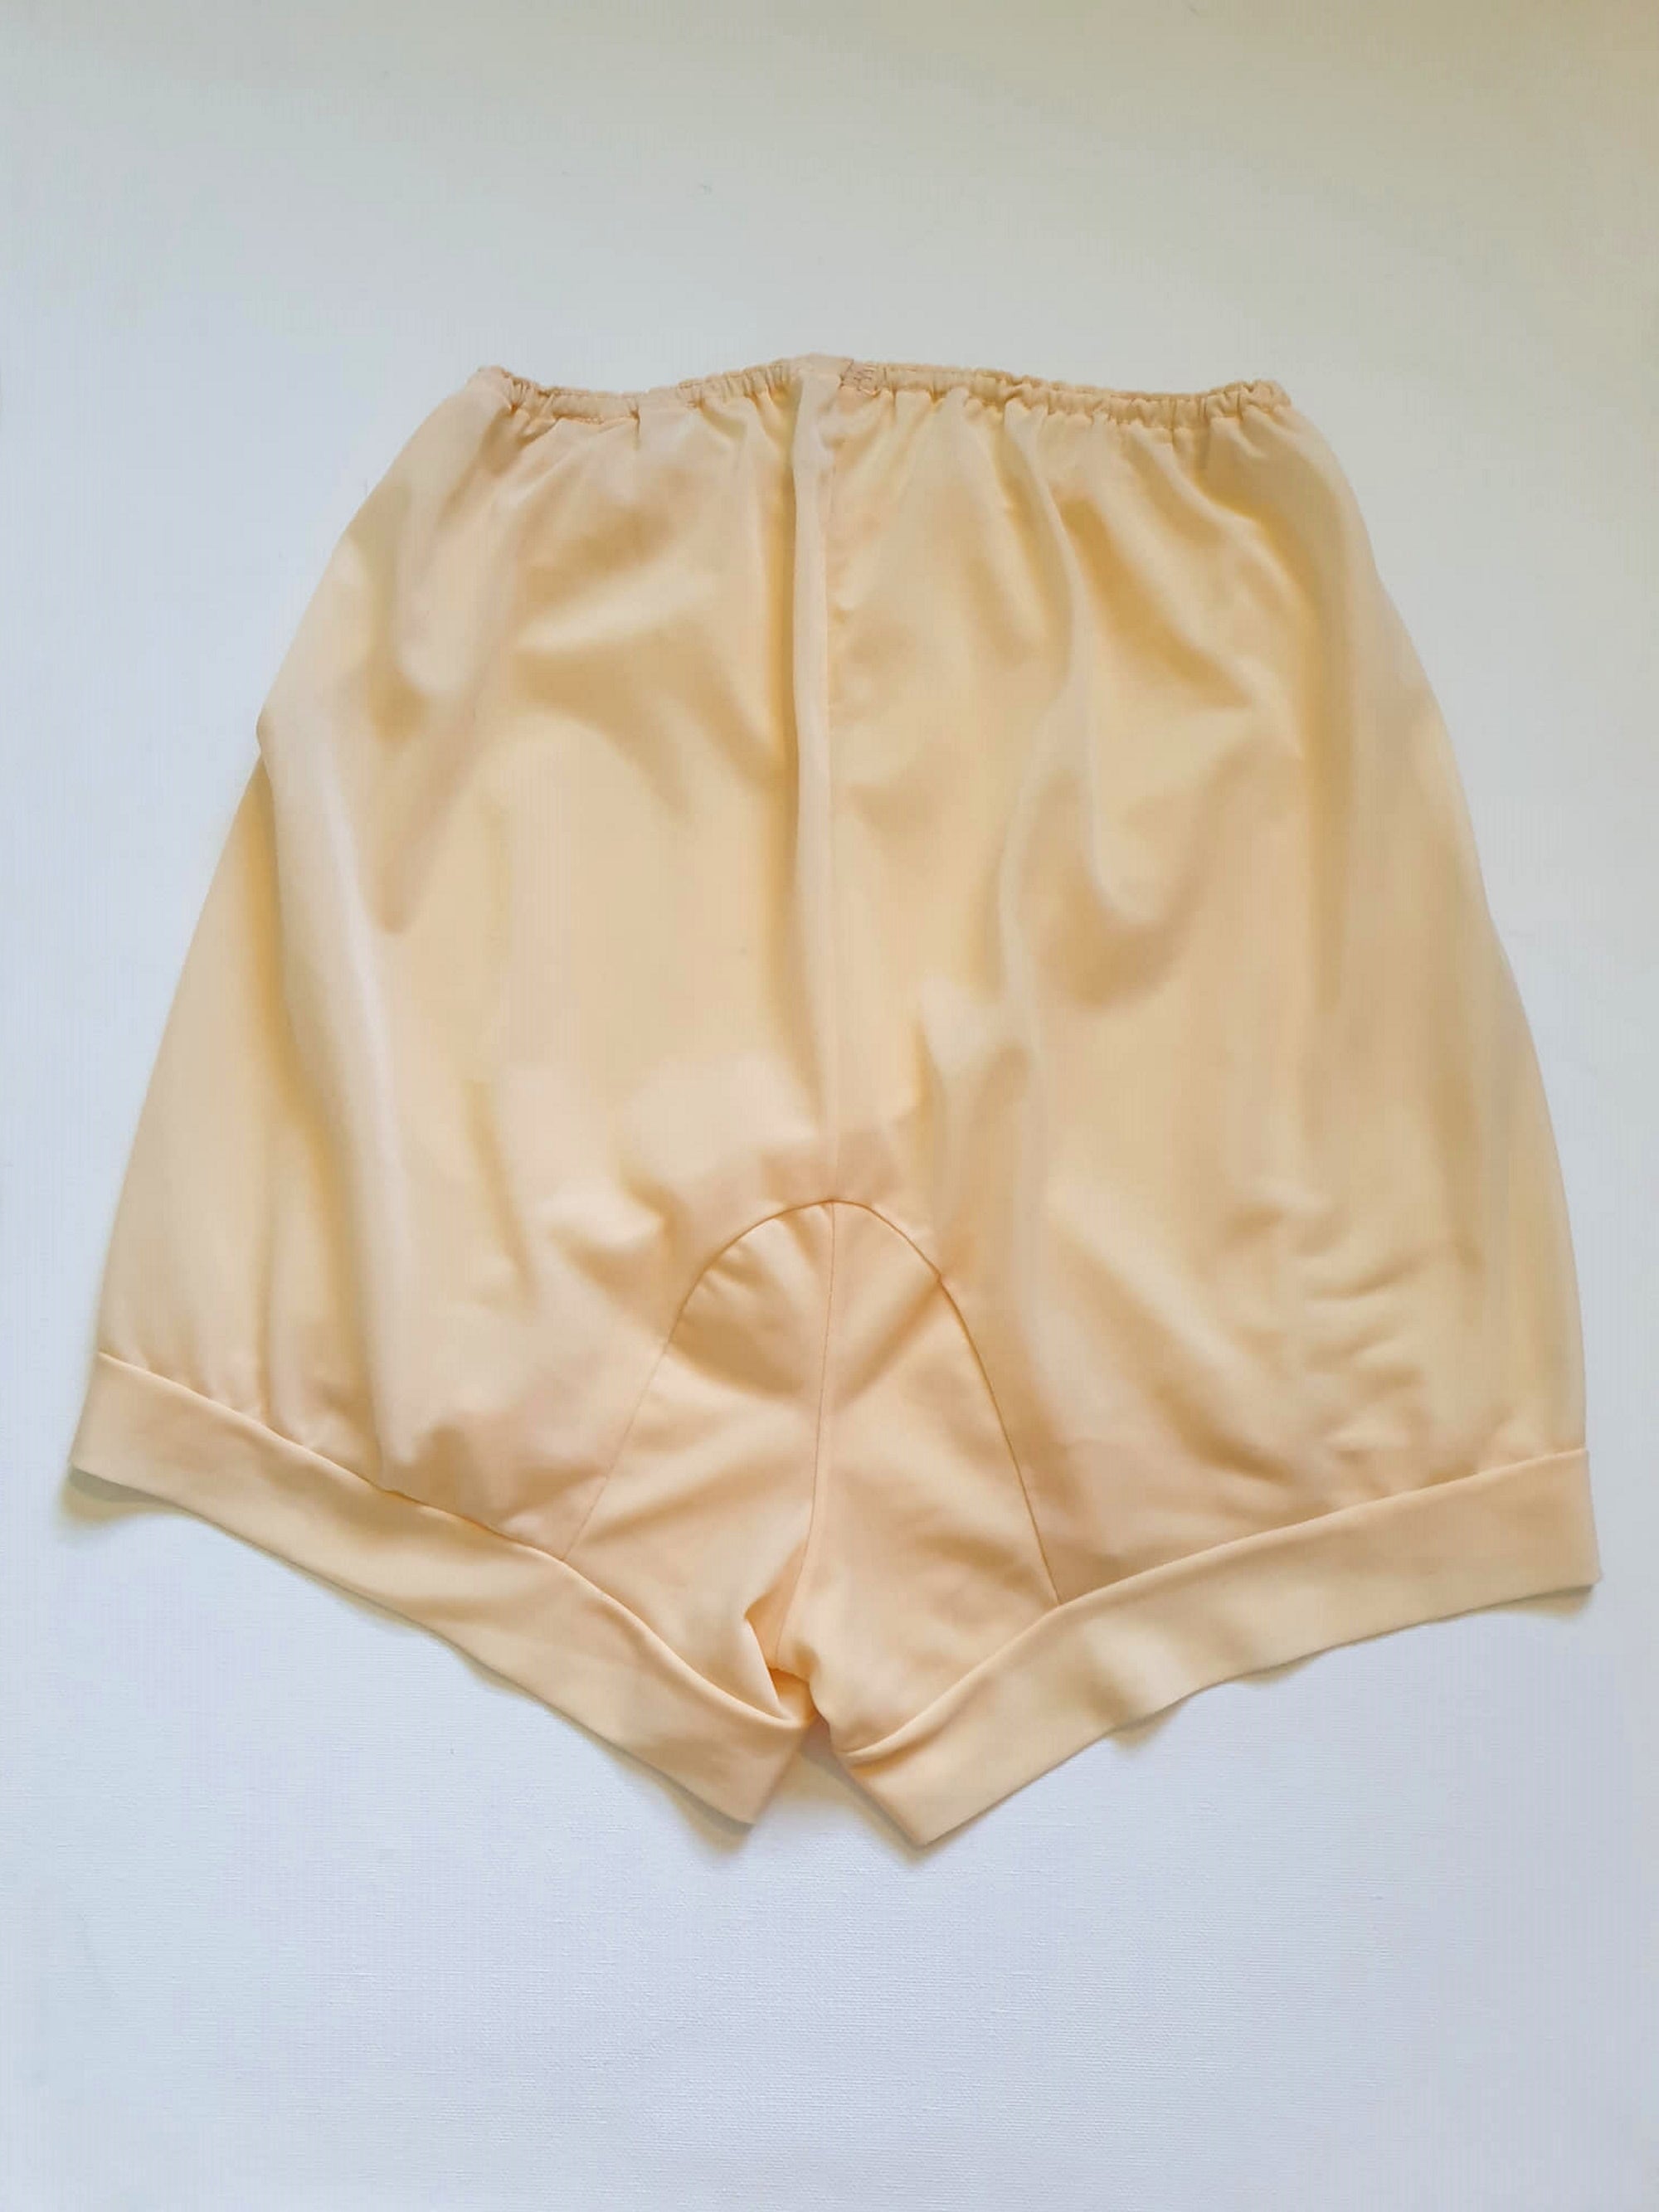 vintage 1940s 1950s peach nylon panties nana pants by prestige - Medium